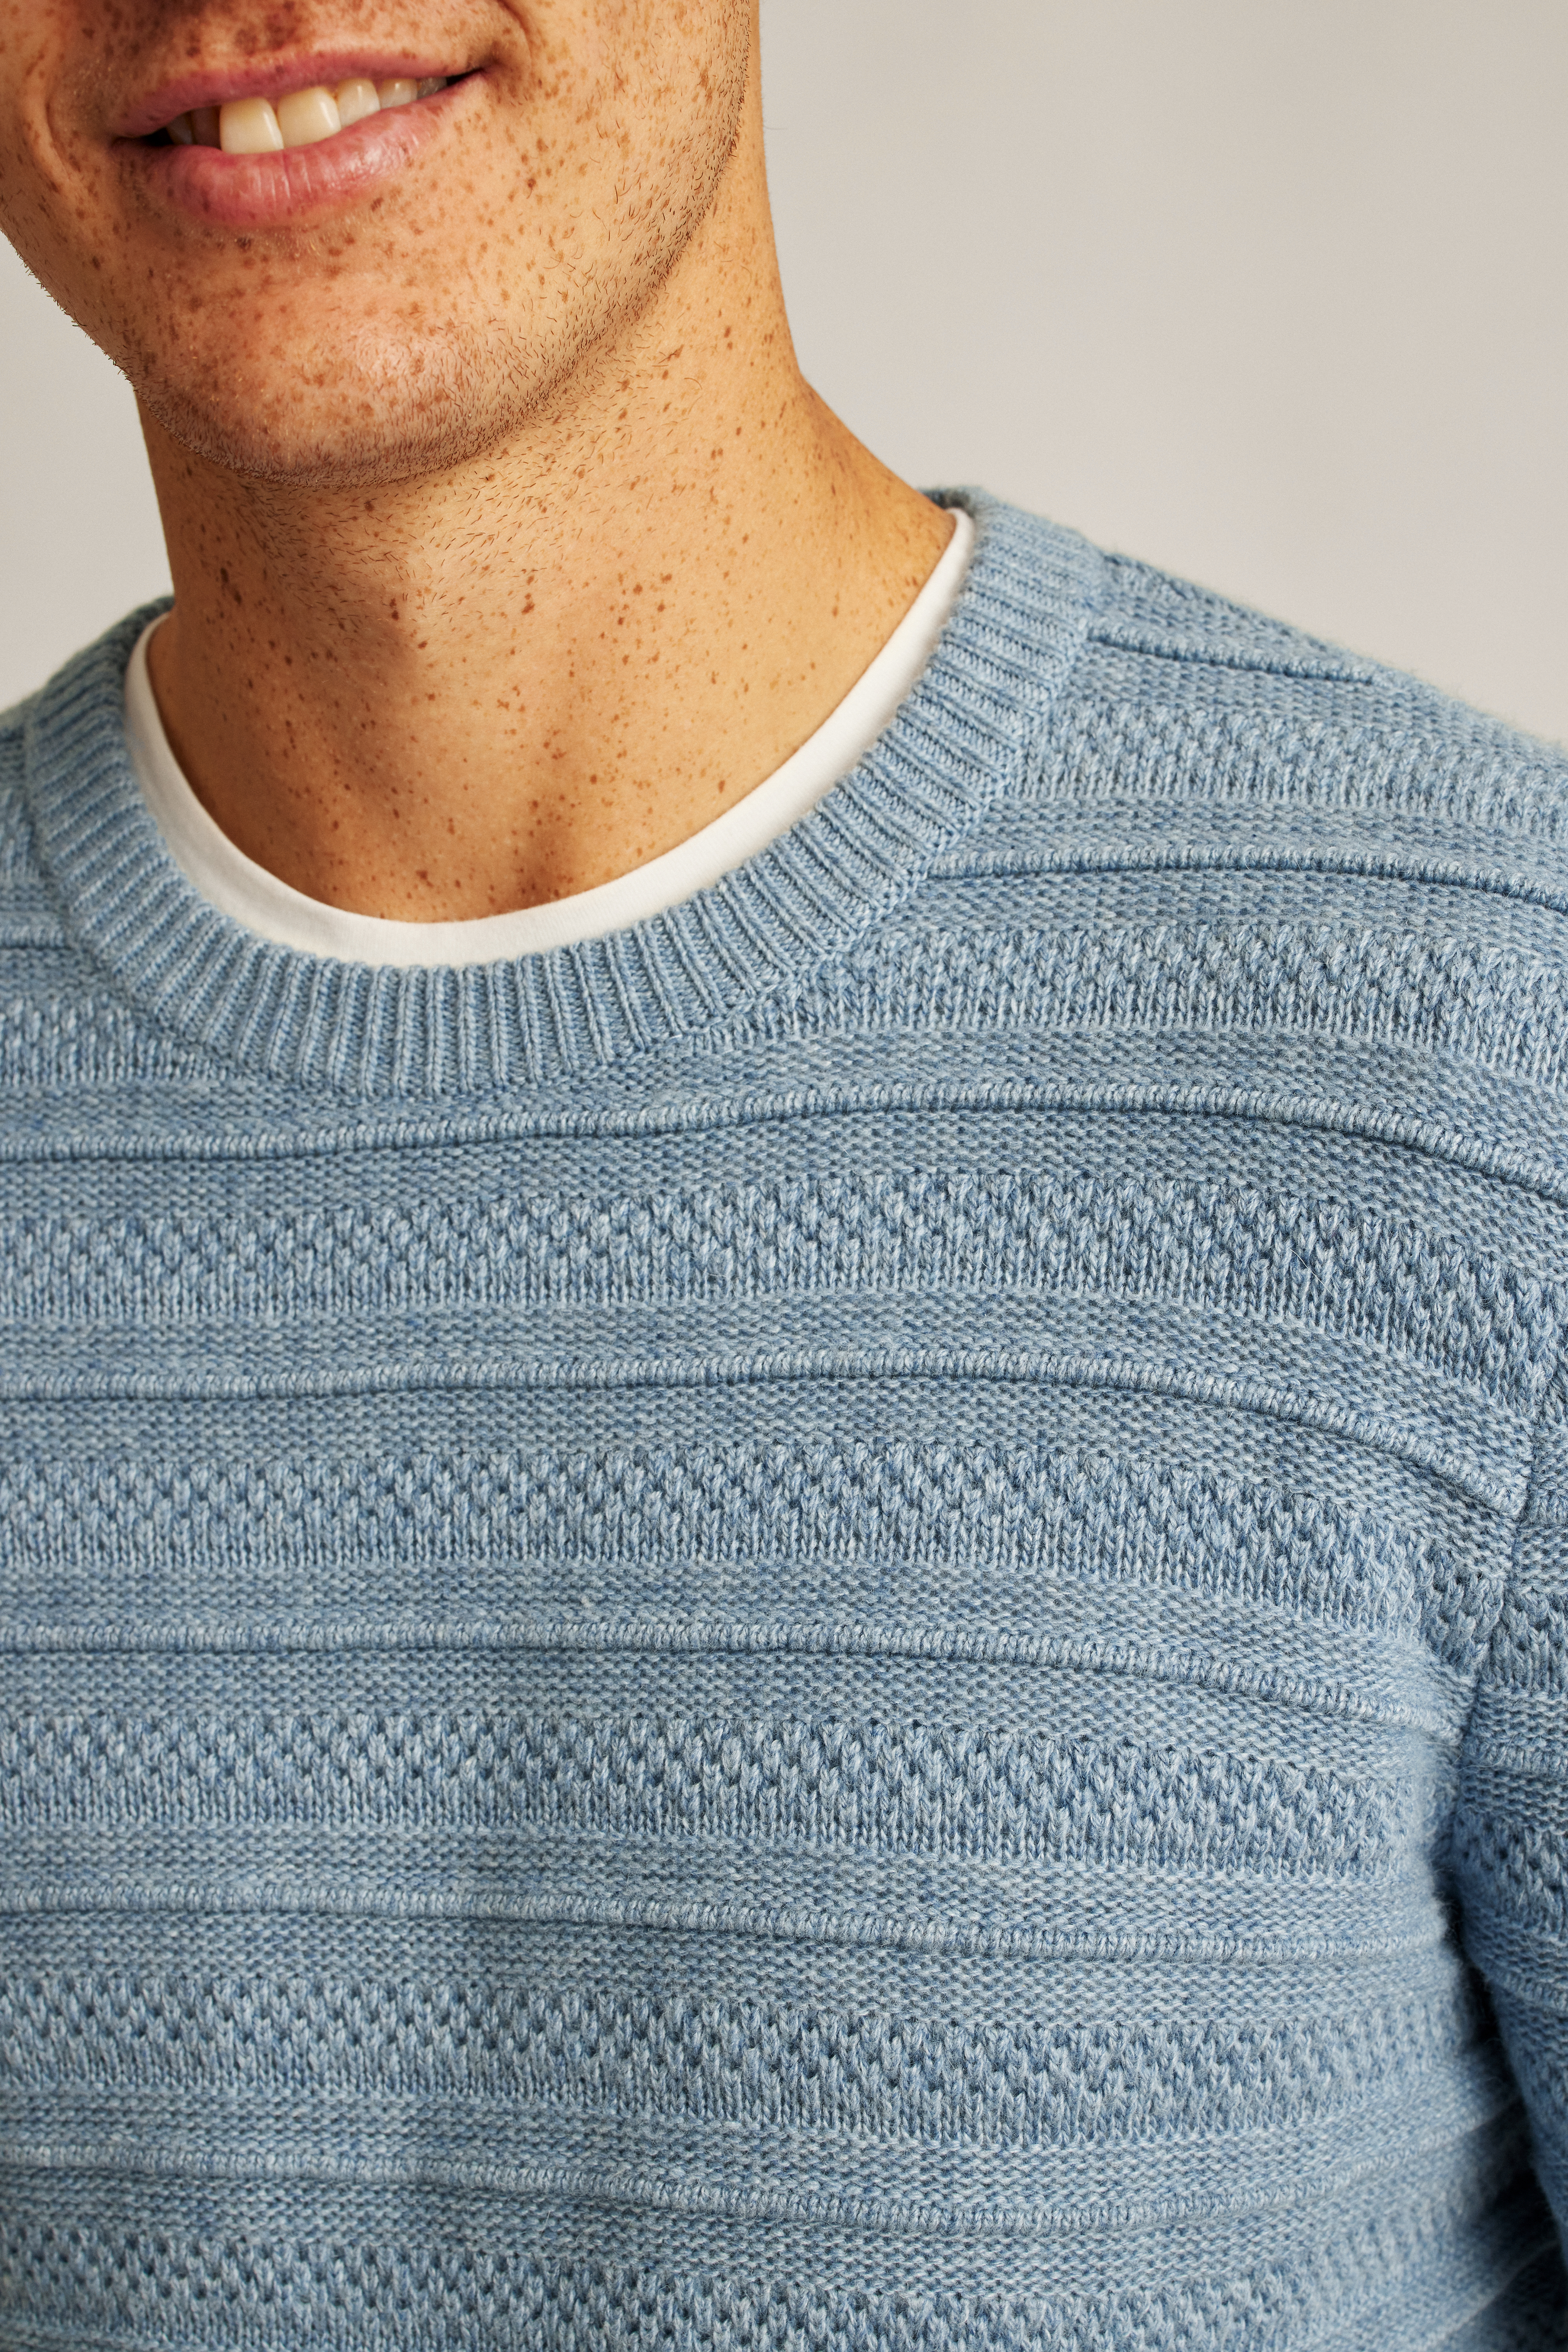 Jacquard Multi-Texture Crewneck Sweater, Women's Hoodies & Sweatshirts